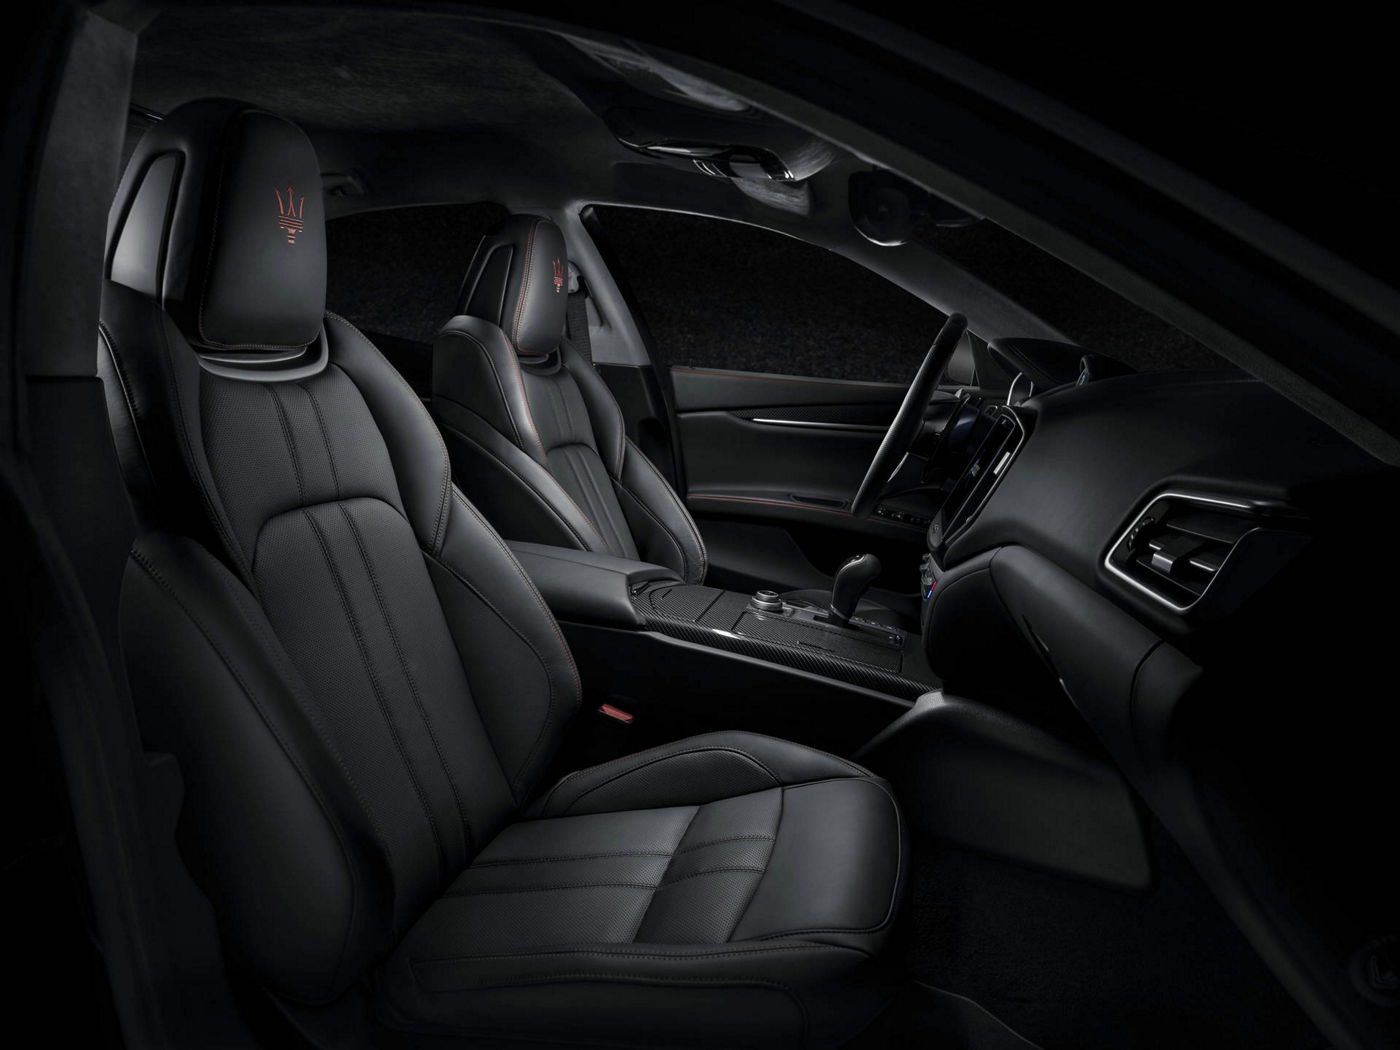 Black leather seats in a Maserati Ghibli GranSport